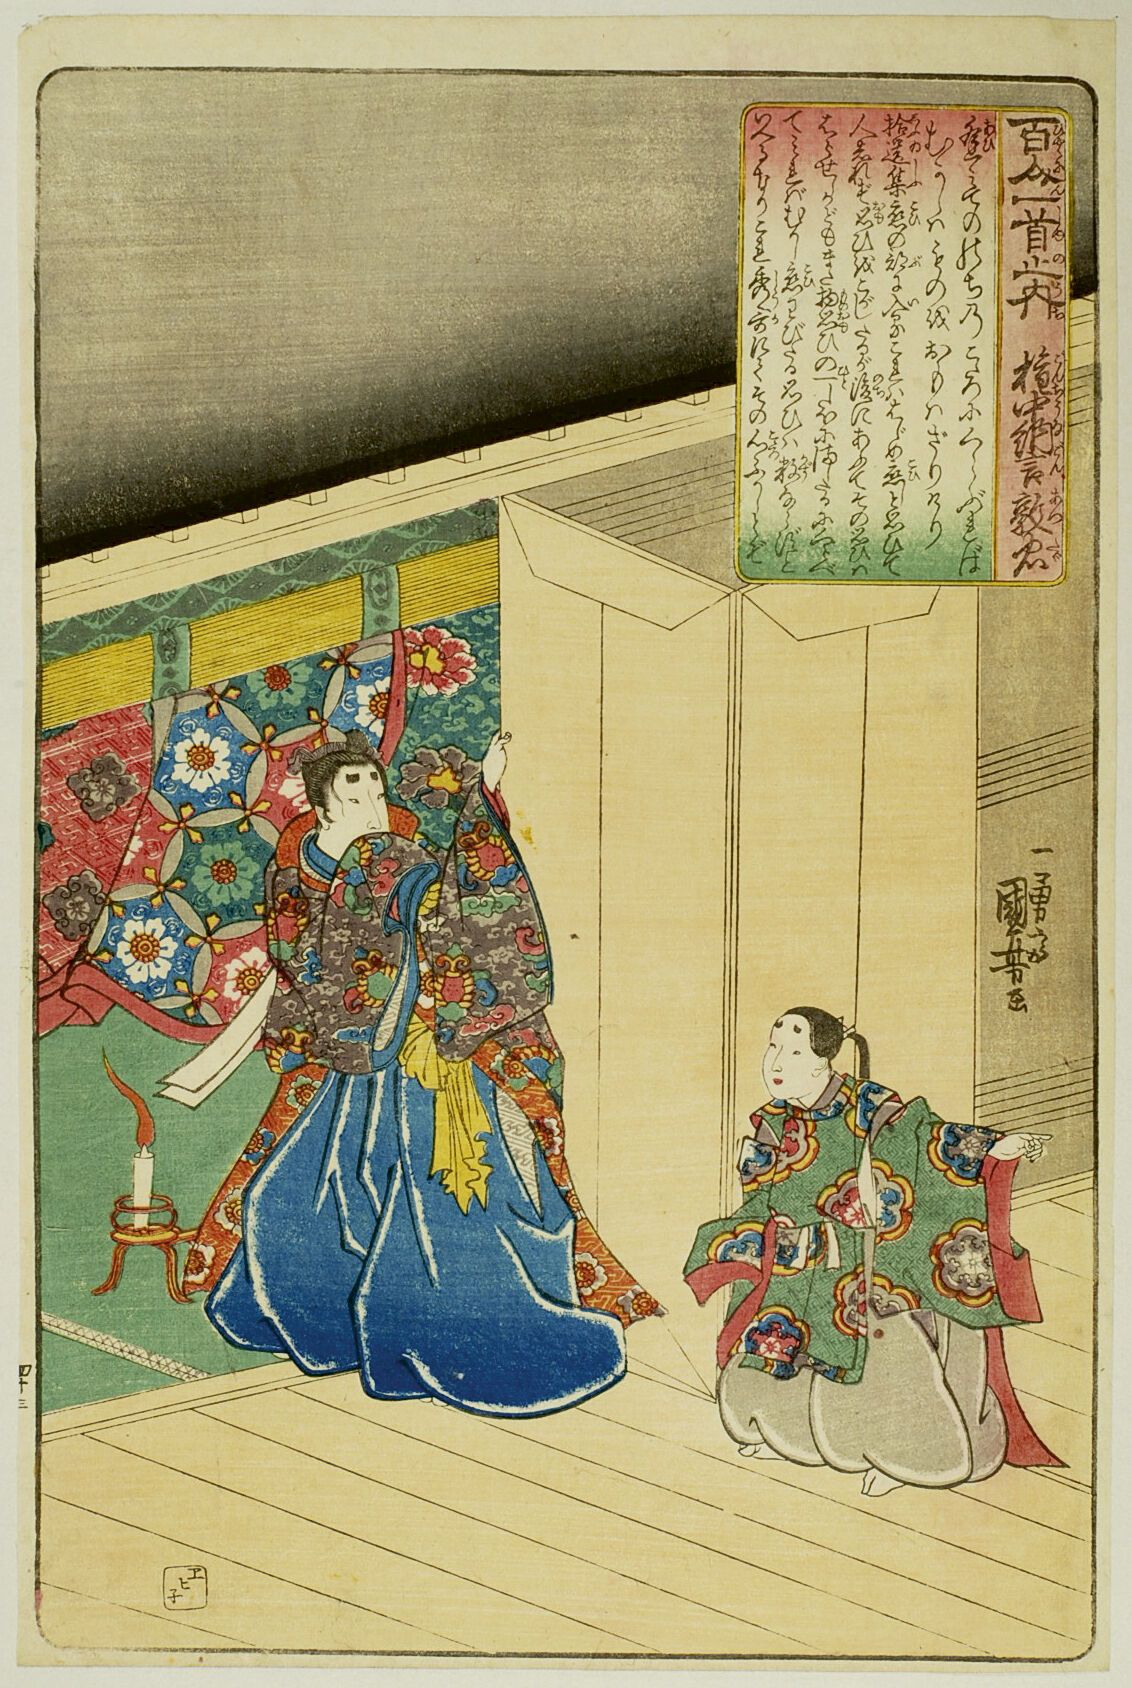 Null 宇多川国义 (1797-1861)
百人一首》系列中的 "Oban tate-e"，板块为 "Gonchûnagon Atsutada"，诗人站在隔板&hellip;